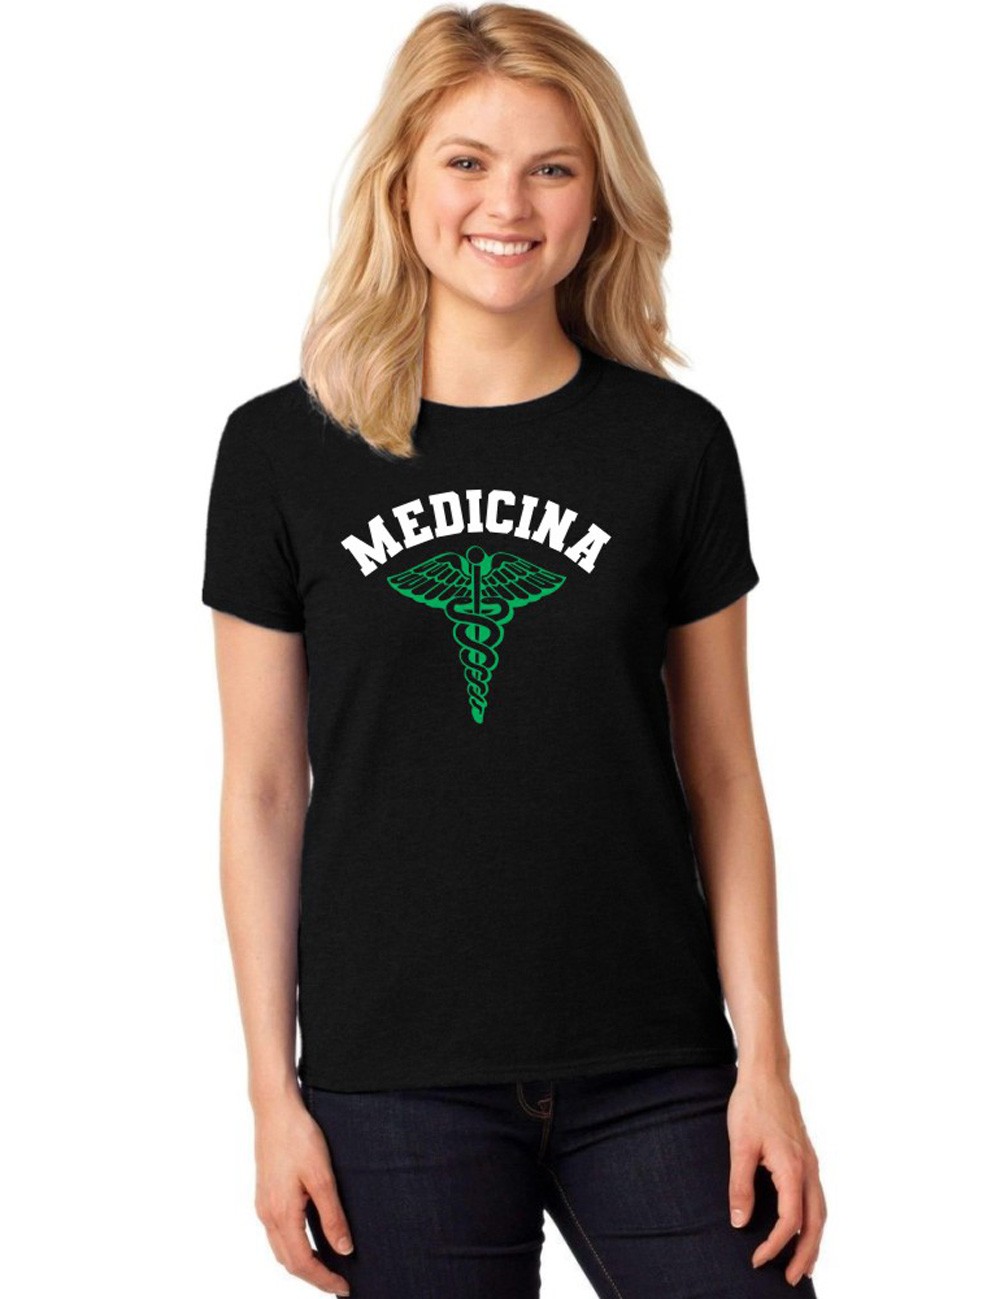 Camiseta Feminina T-Shirt Universitária Faculdade Medicina